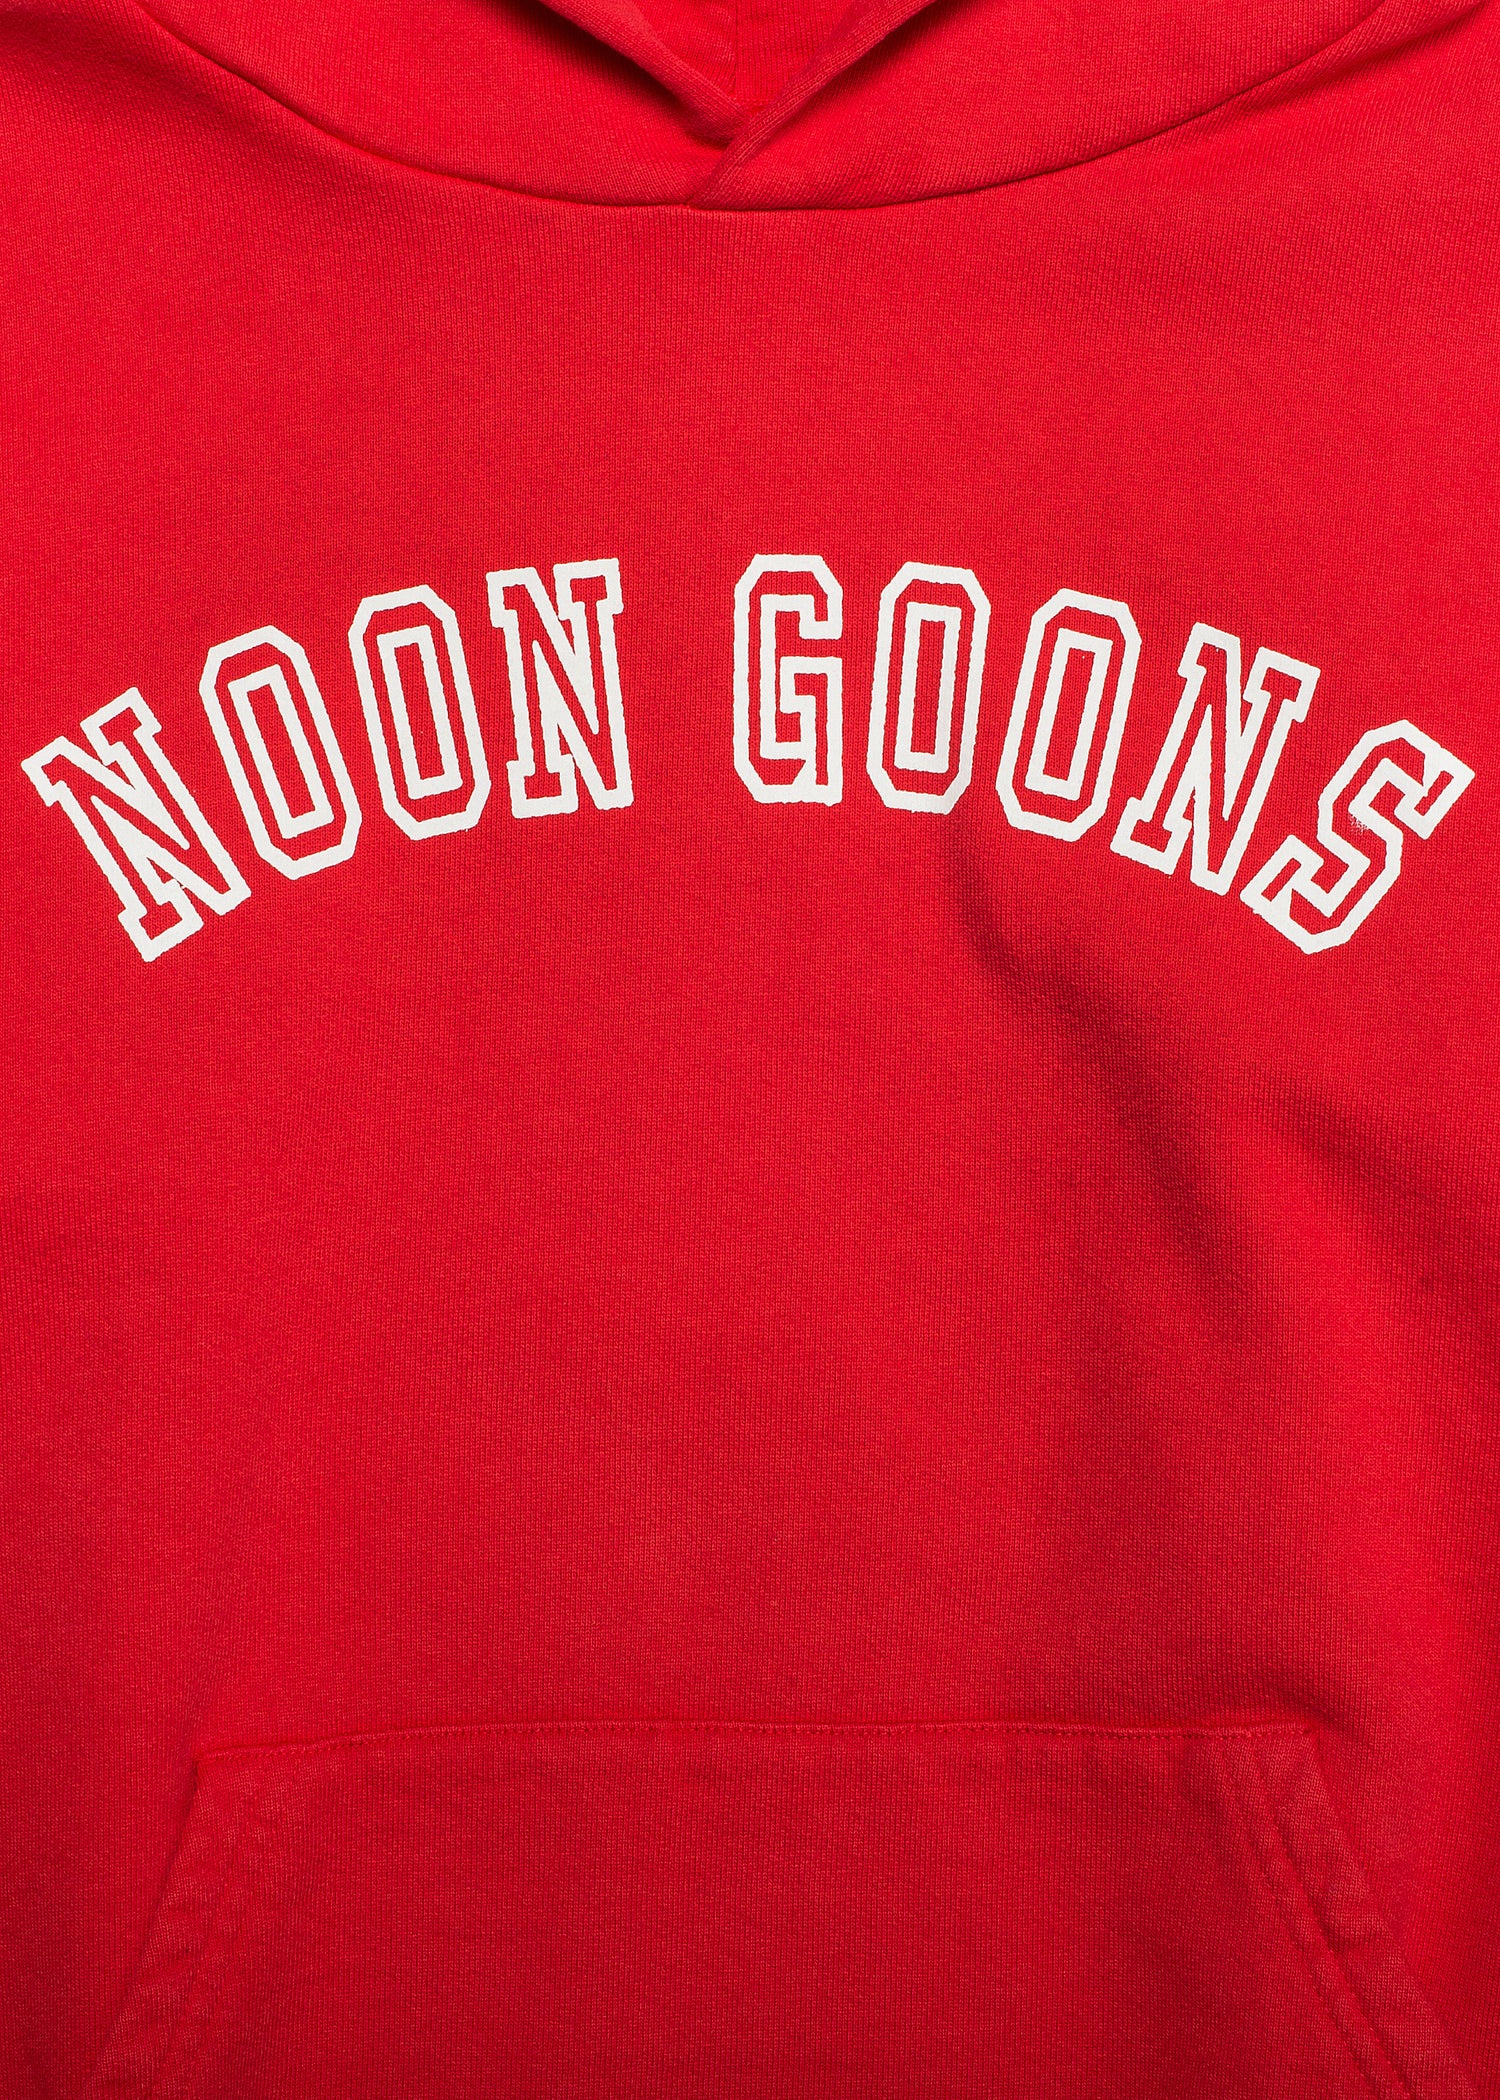 Noon Goons Varsity Sweater Red